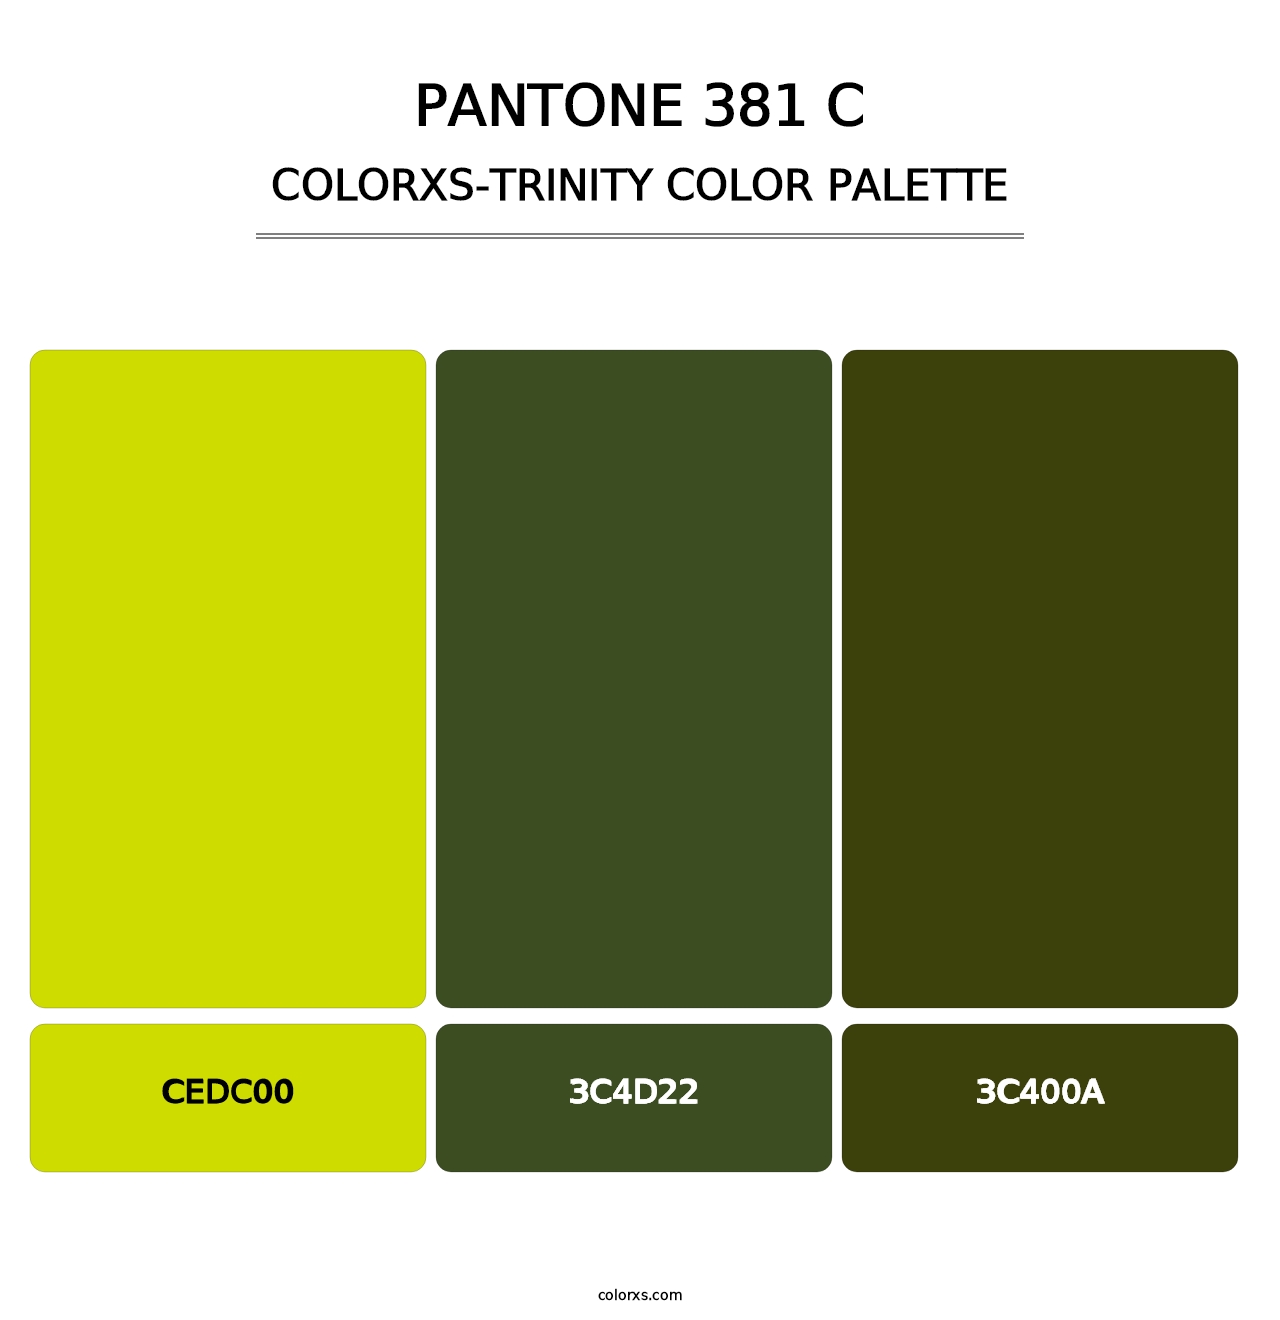 PANTONE 381 C - Colorxs Trinity Palette